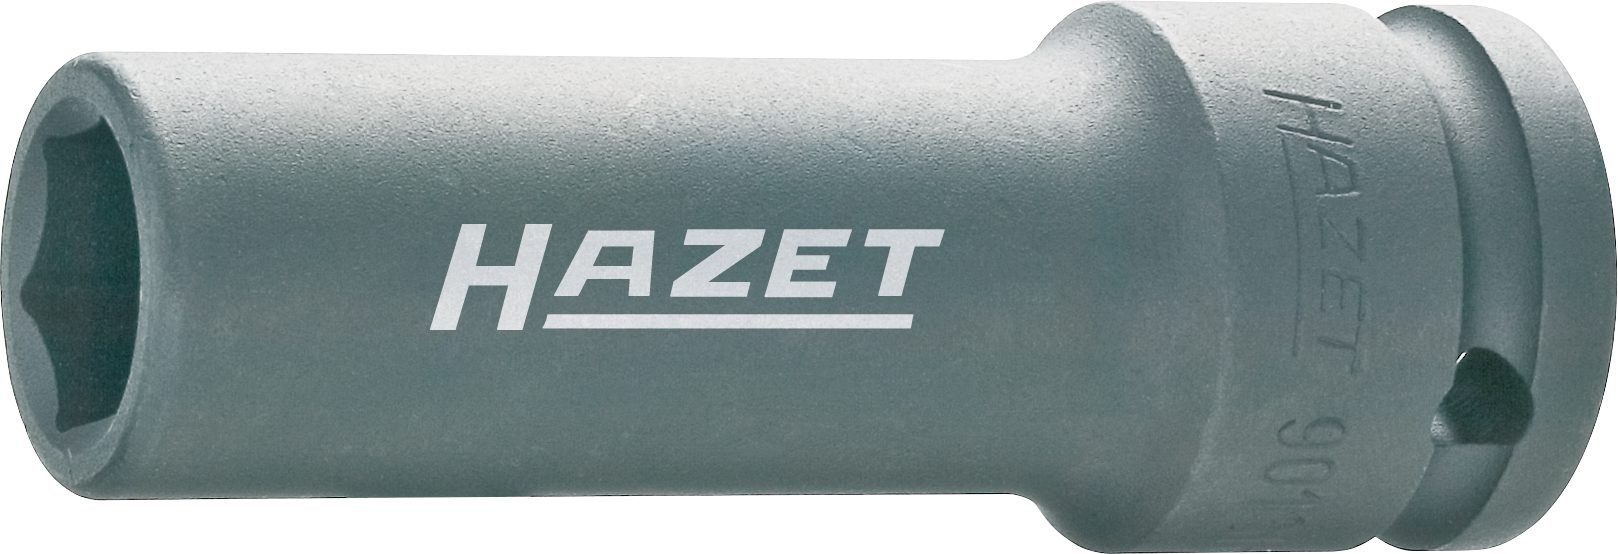 HAZET 901SLG-17 Hazet (6kt), Kraft-Steckschlüssel-Einsatz Steckschlüssel